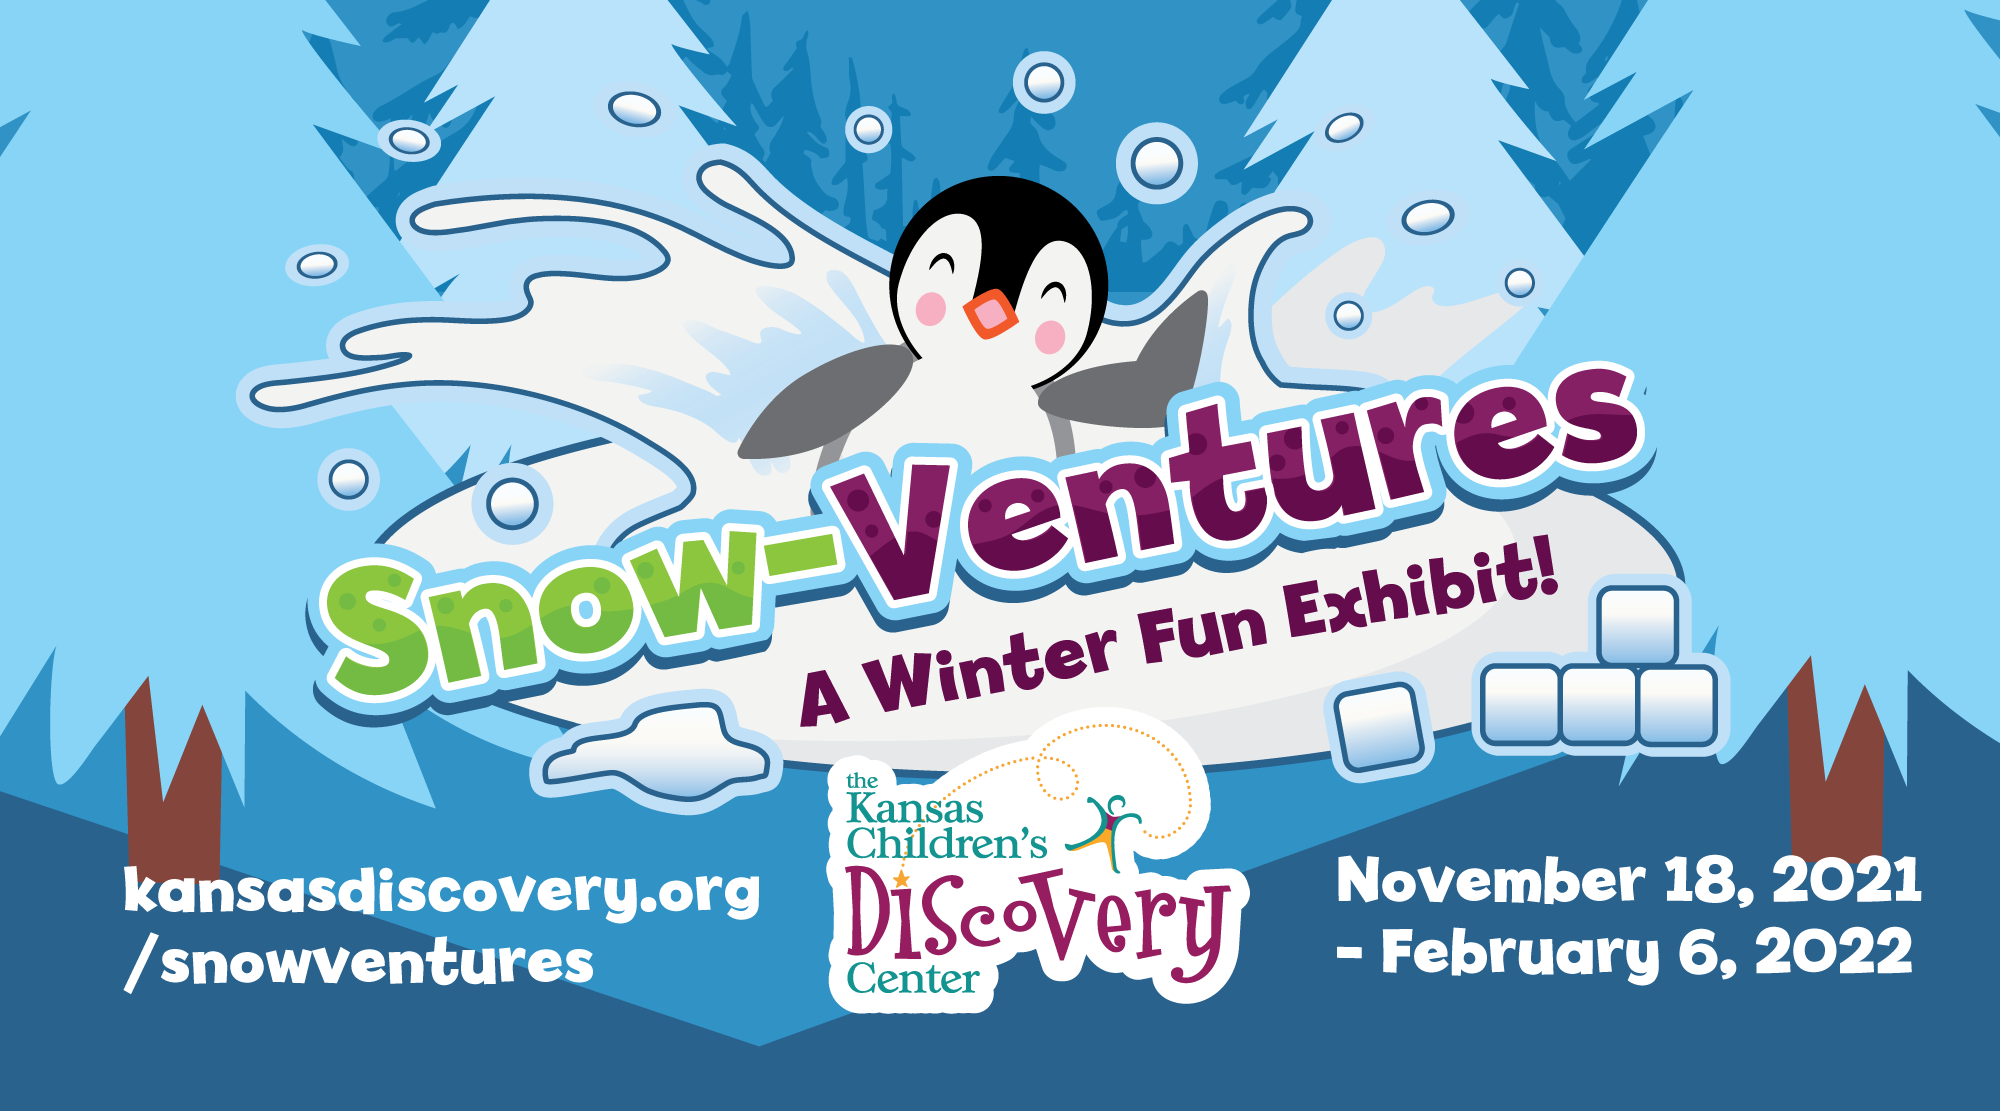 Win Tickets to Snow-Ventures